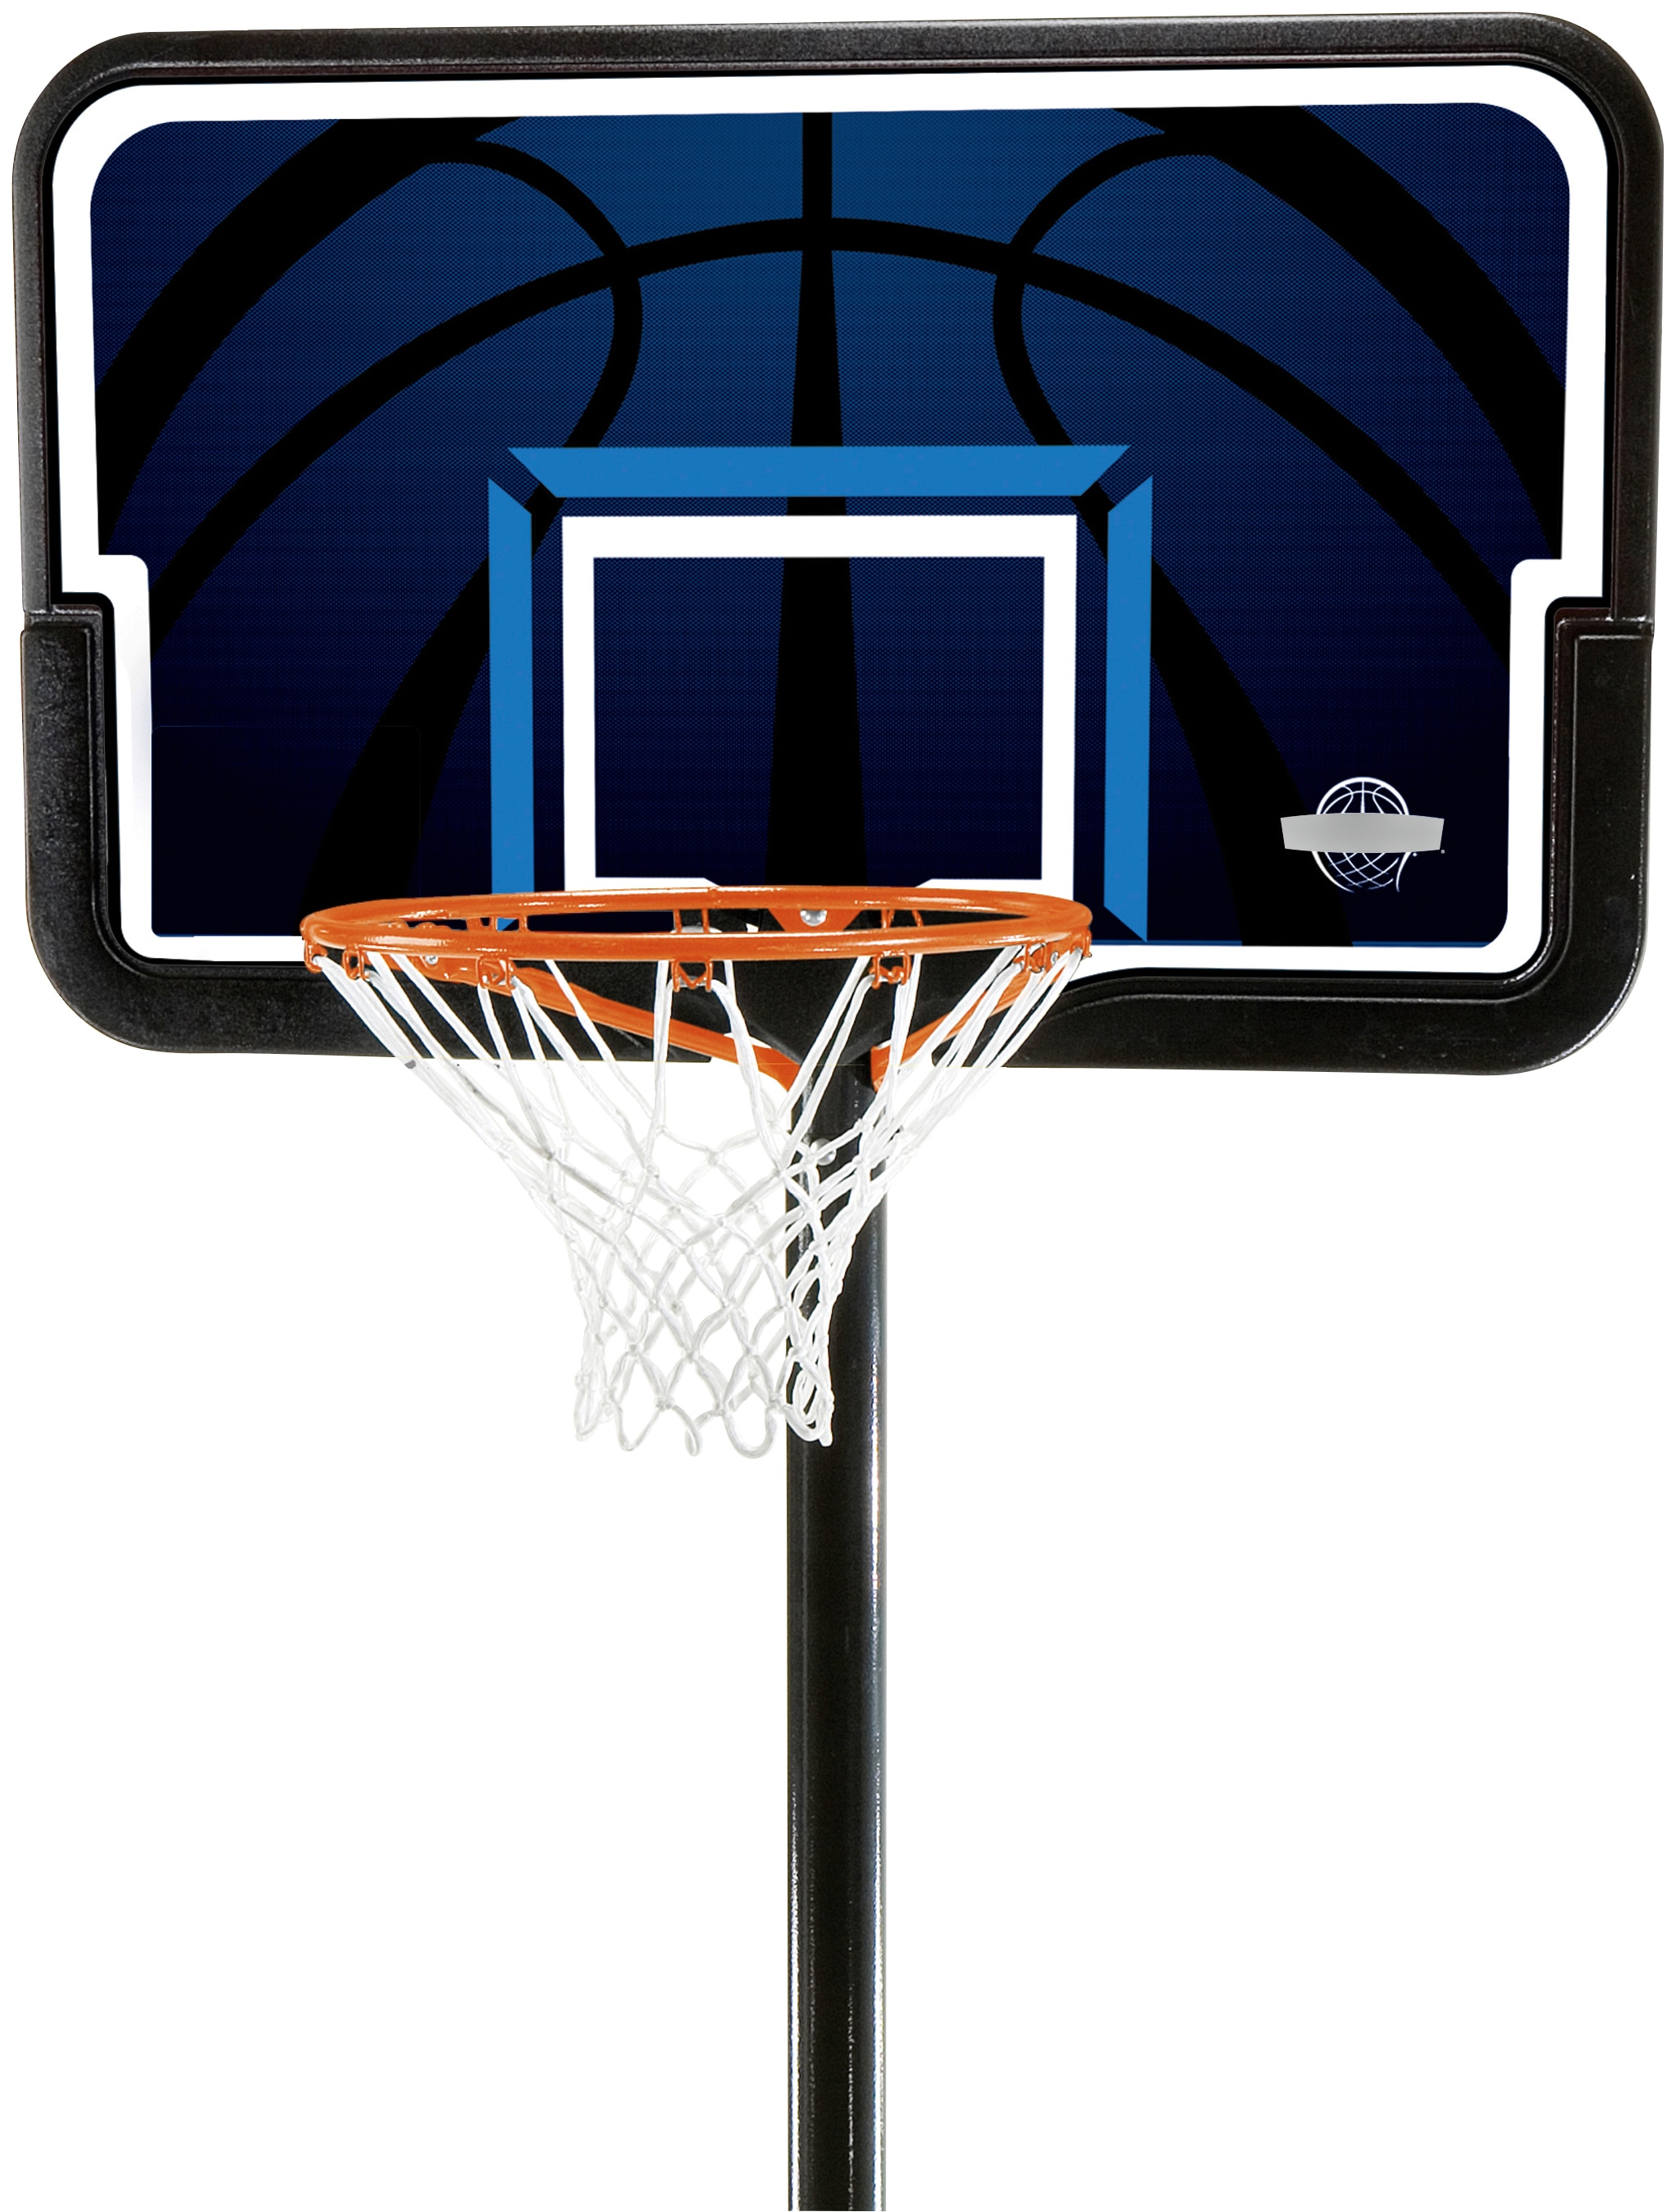 50NRTH Basketballkorb schwarz/blau BAUR höhenverstellbar »Nevada«, 